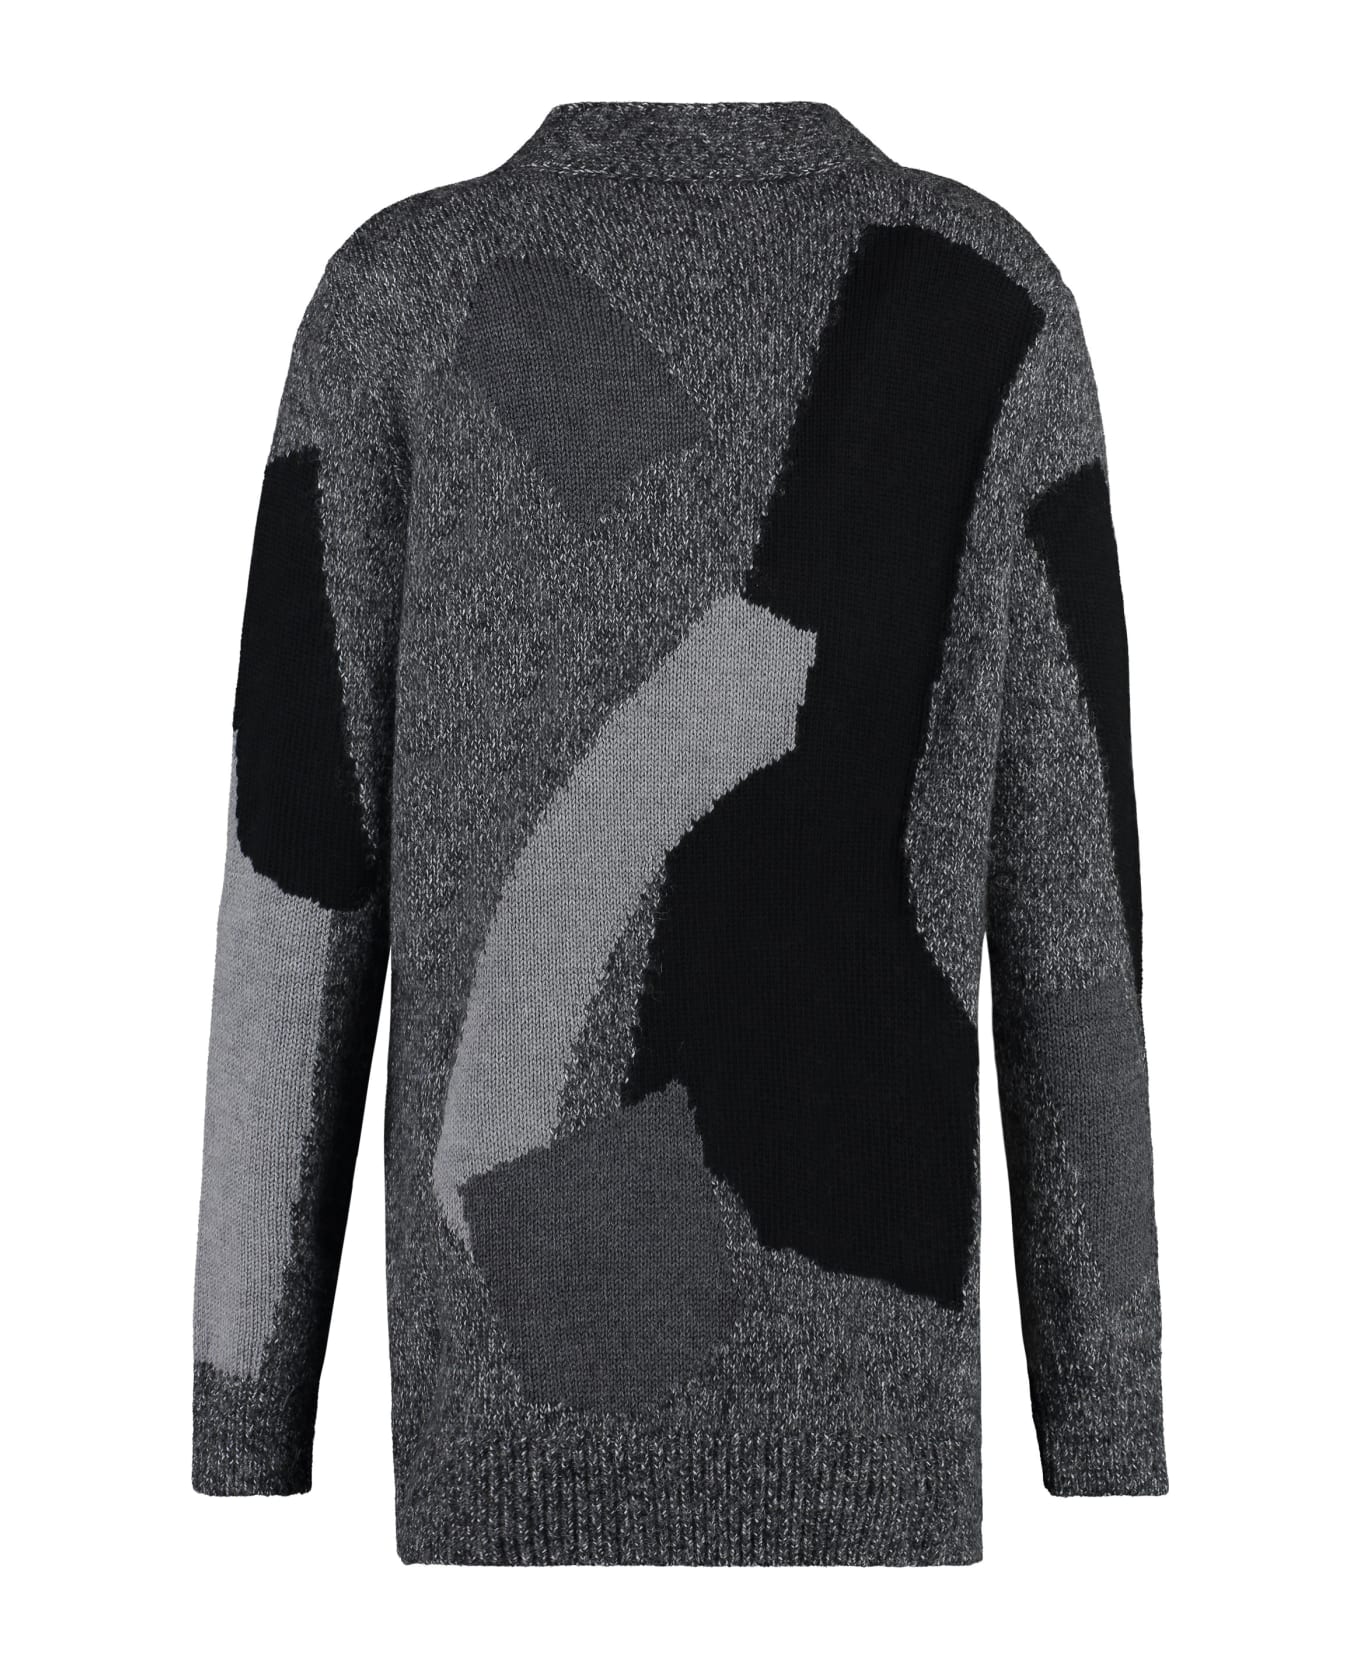 Moschino Knitted Cardigan - grey